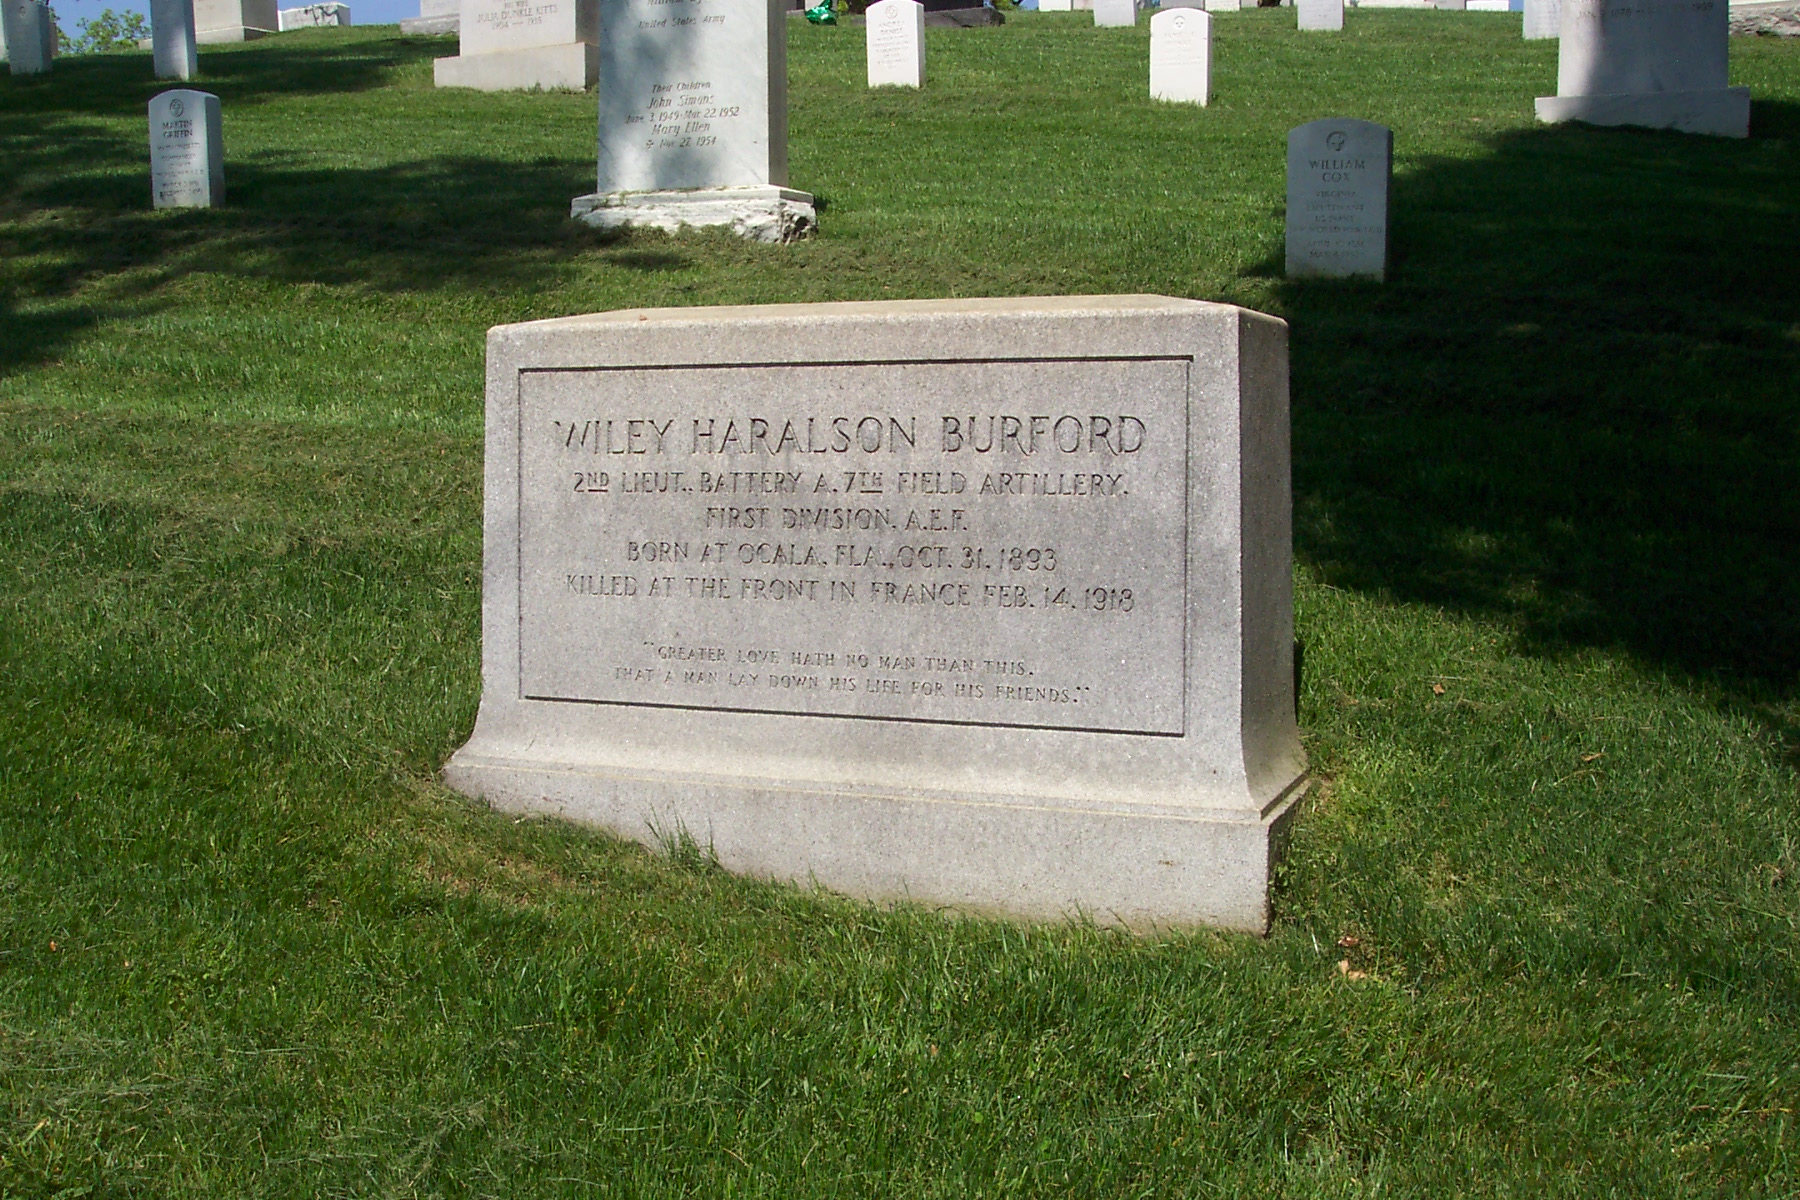 whburford-gravesite-photo-april-2004-001